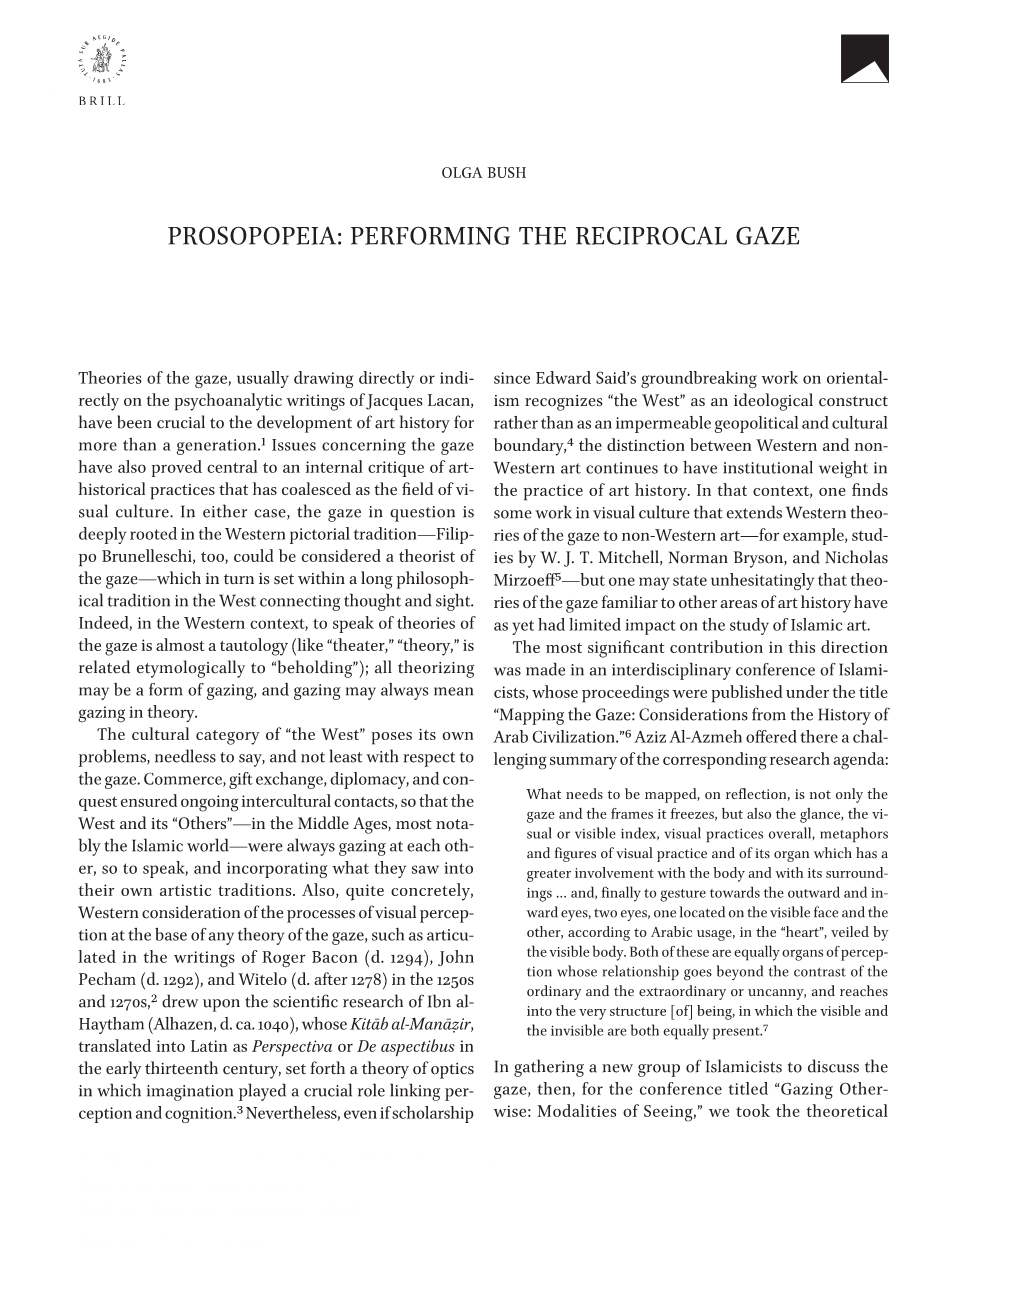 Prosopopeia: Performing the Reciprocal Gaze 13